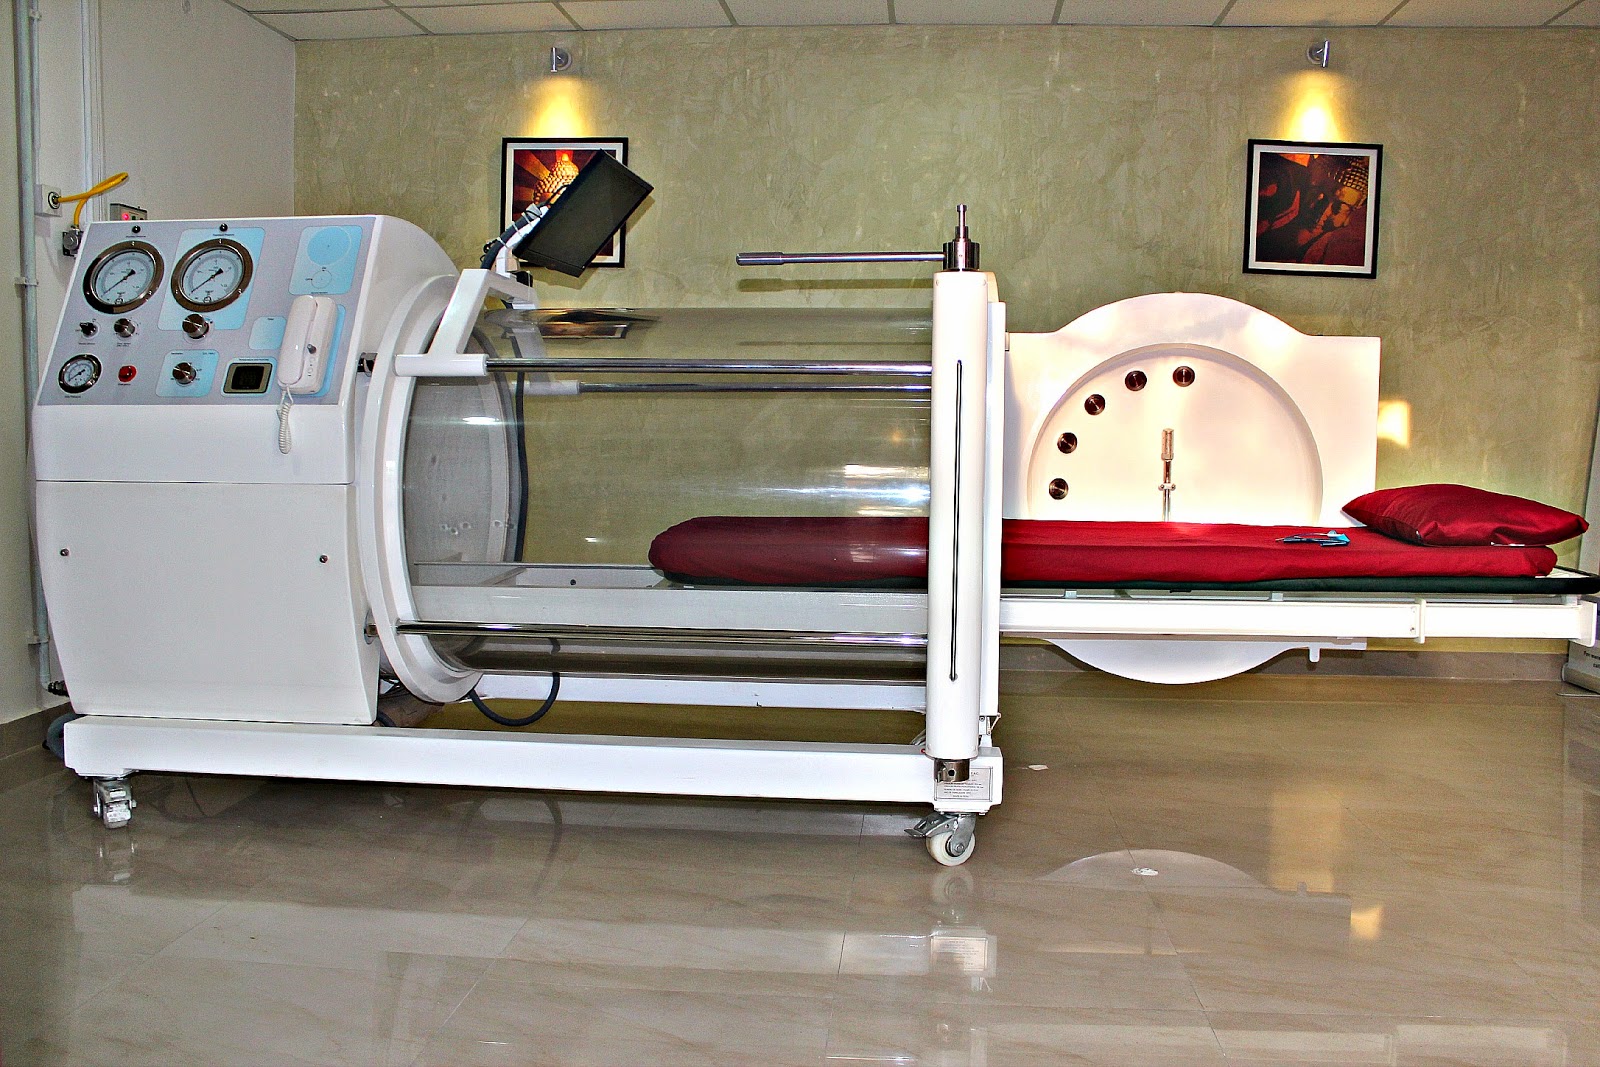 http://1.bp.blogspot.com/-re0KohkZs_s/Uz0XO2JLaYI/AAAAAAAAEsk/Y4mLMdfkv3Y/s1600/India+Hyperbaric+chamber.jpg